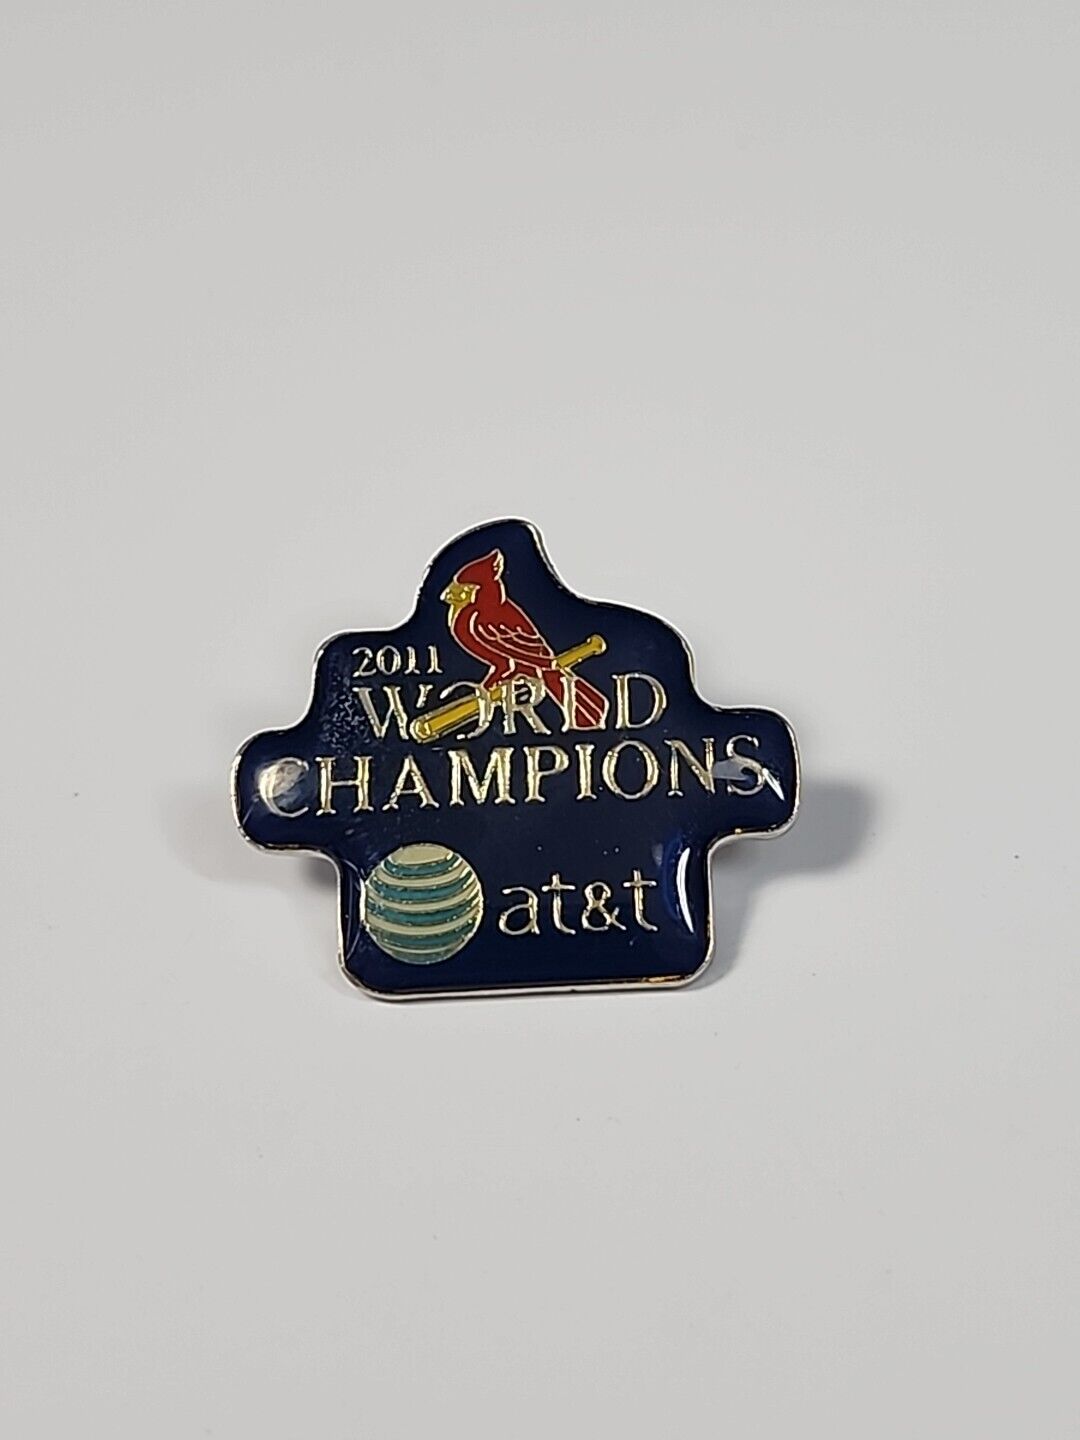 St. Louis Cardinals 2011 World Champions Souvenir Pin AT&T Sponsor